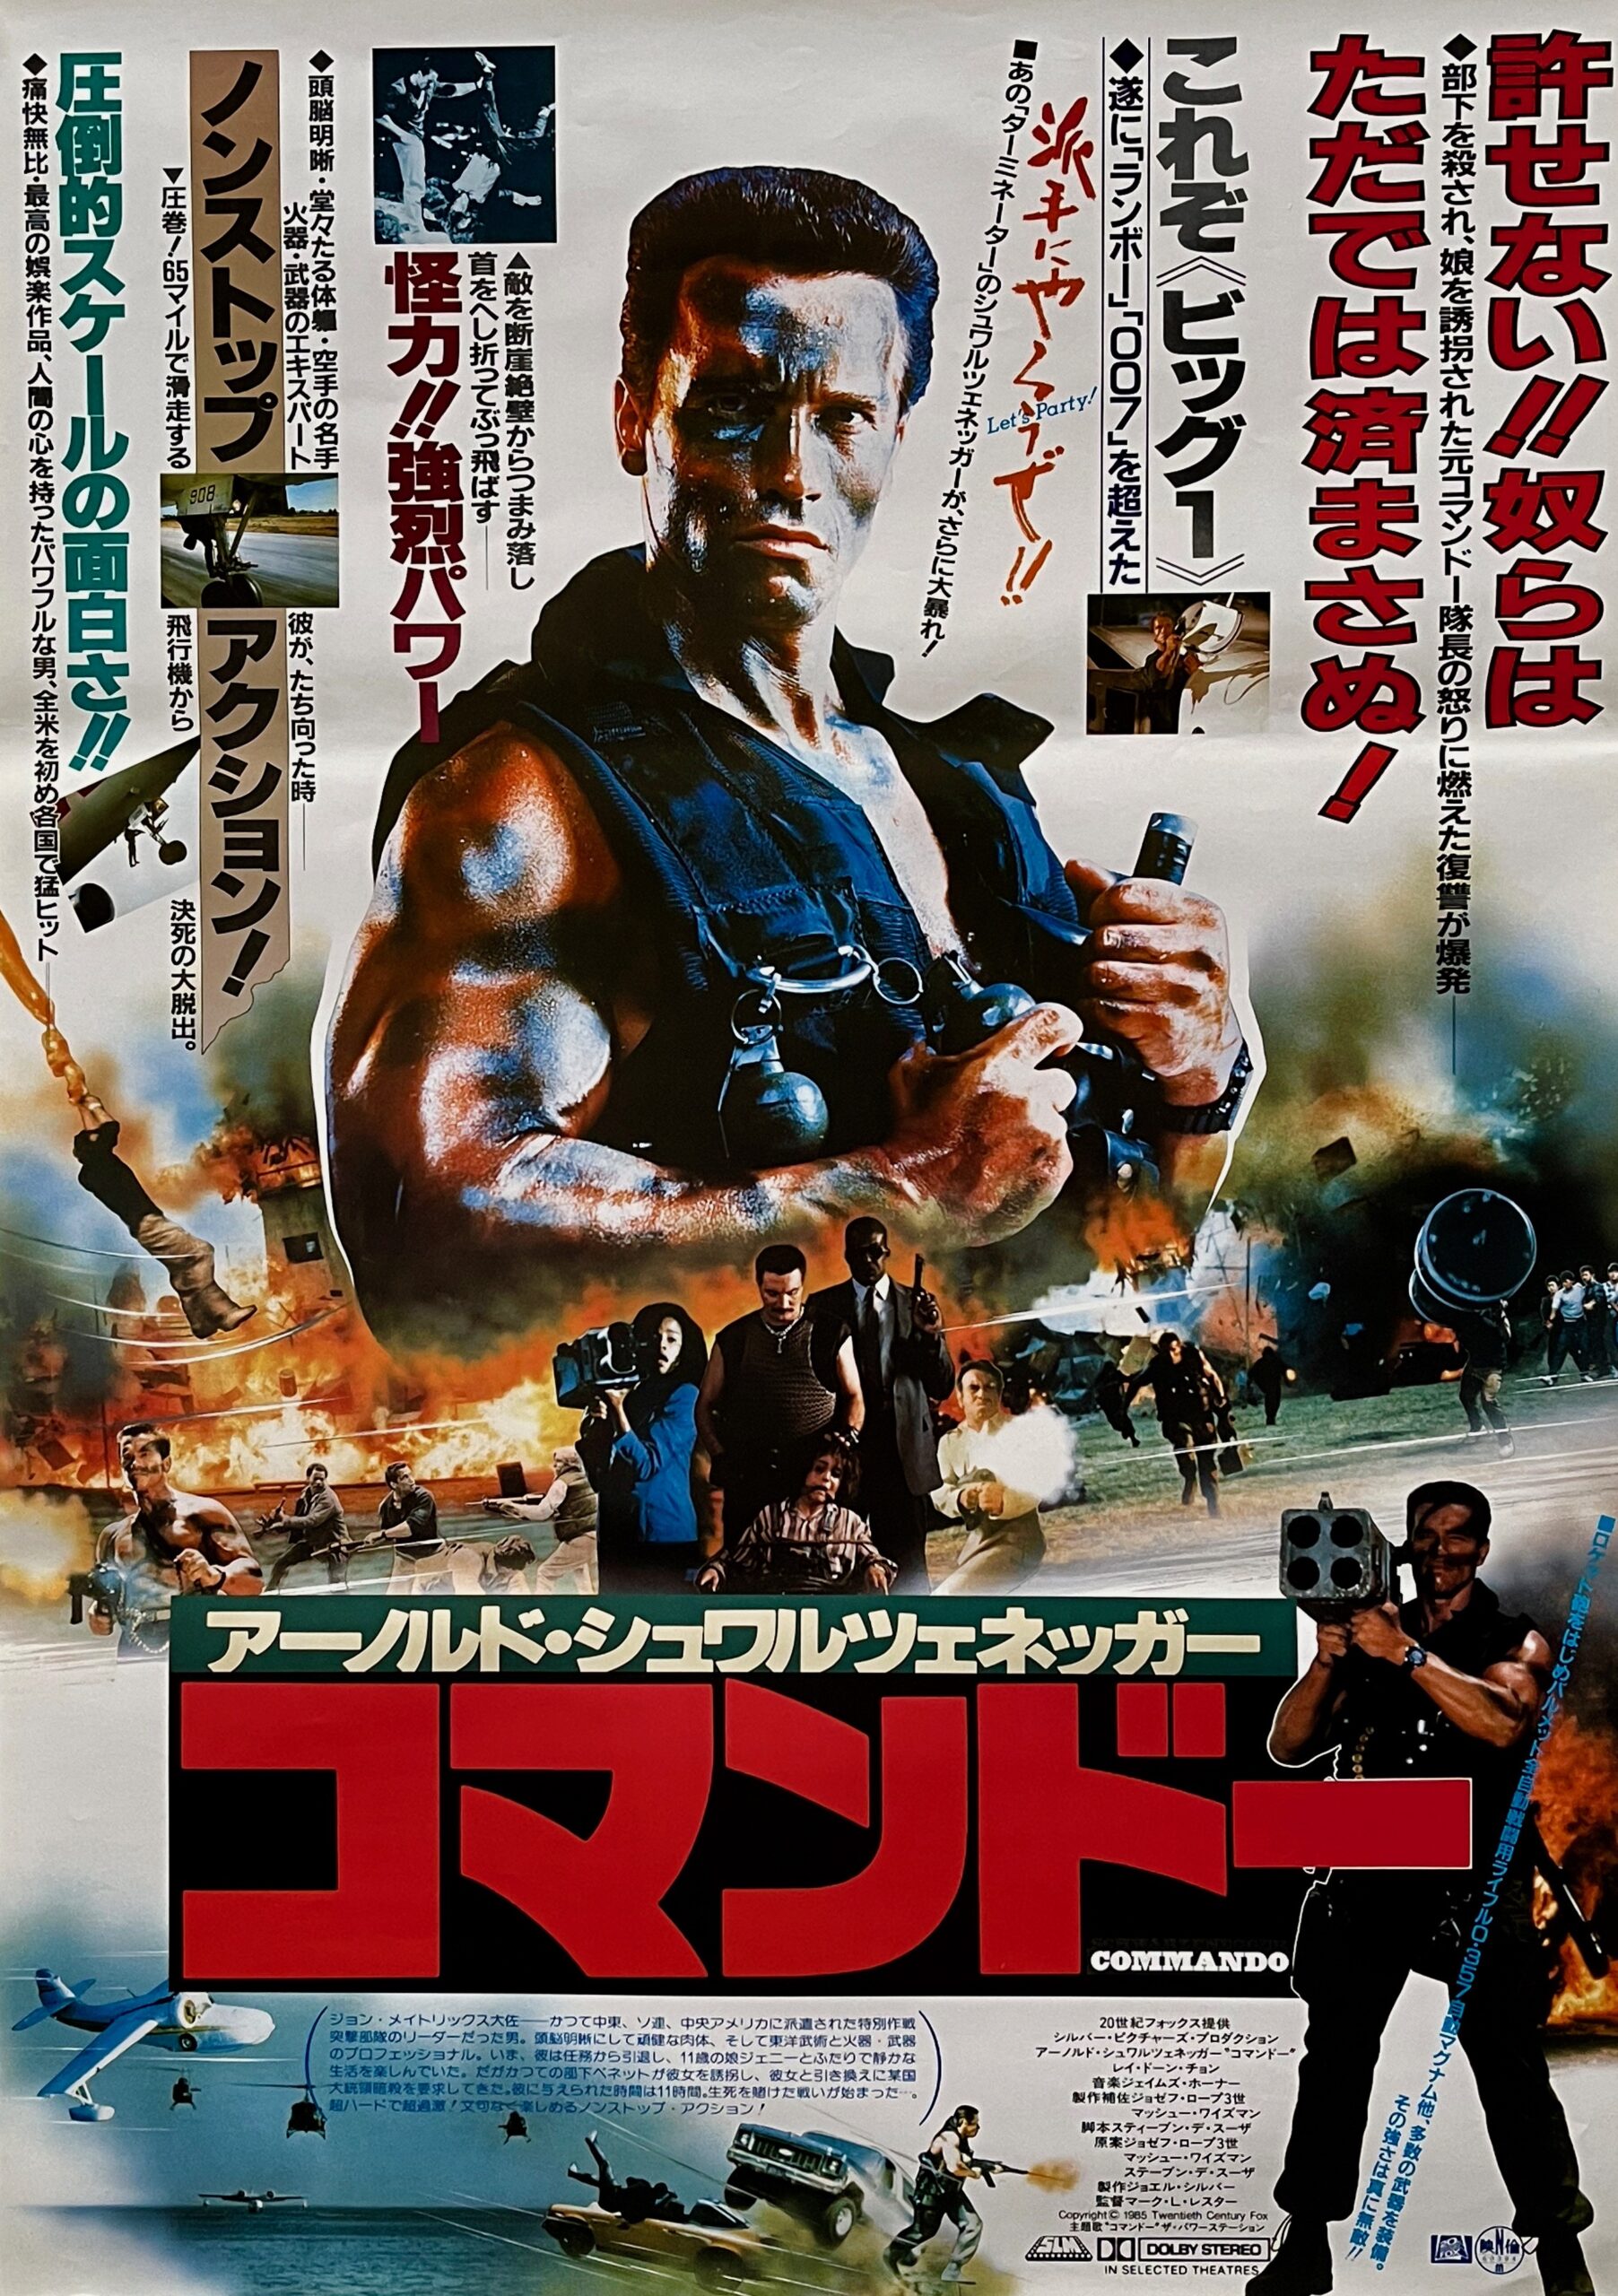 Commando 1985 Arnold Schwarzenegger Japanese Chirashi Mini Movie Poster B5 